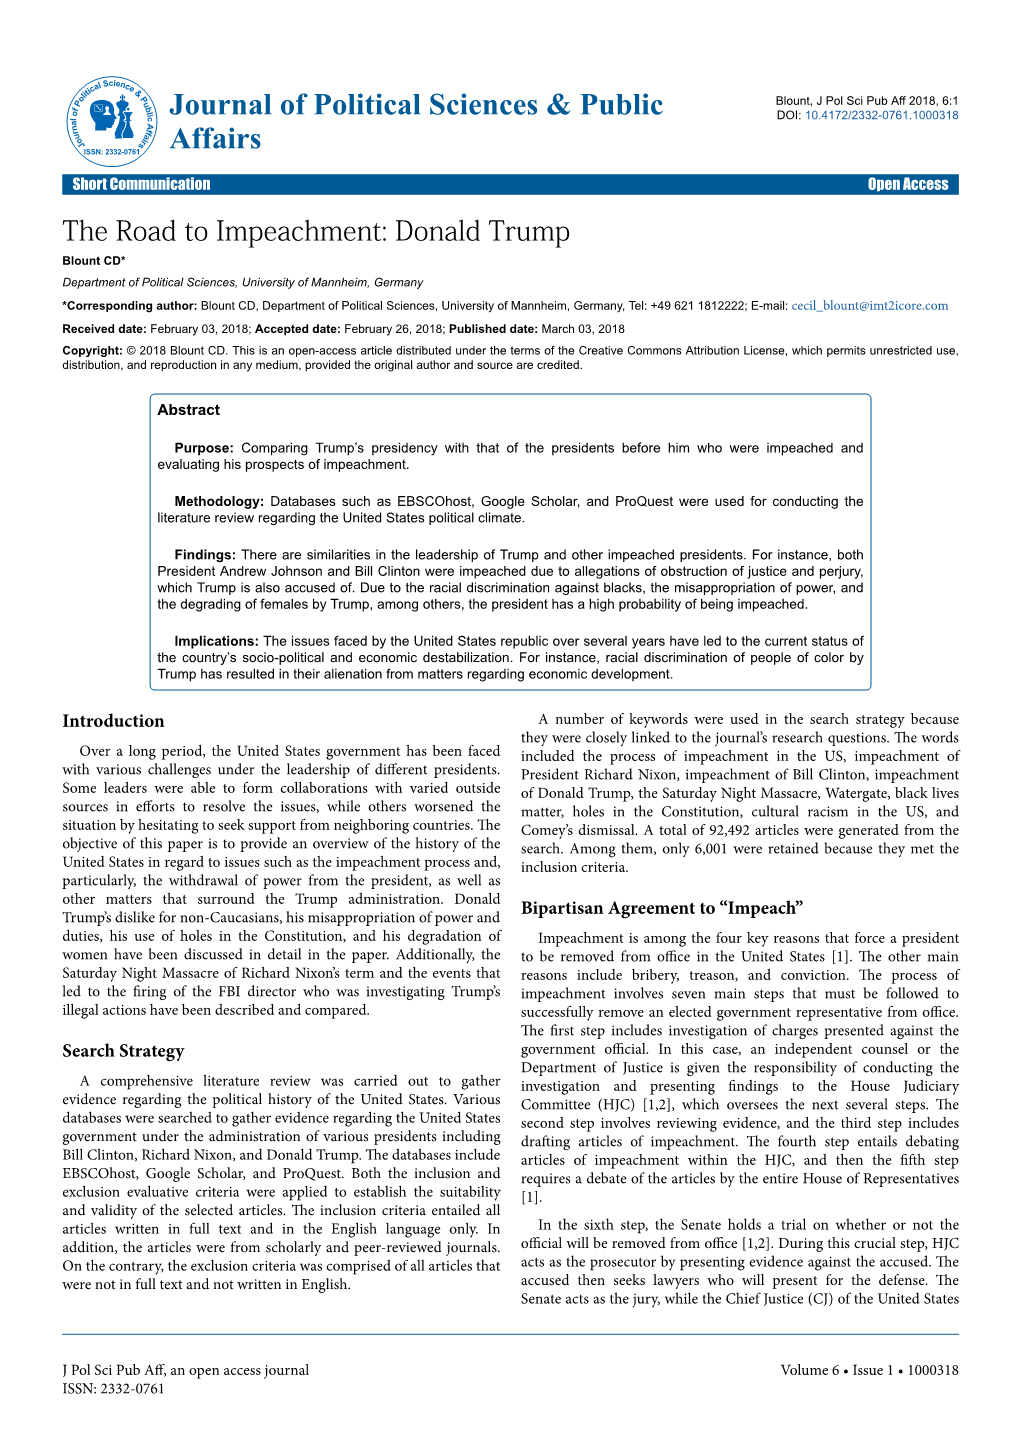 The Road to Impeachment: Donald Trump